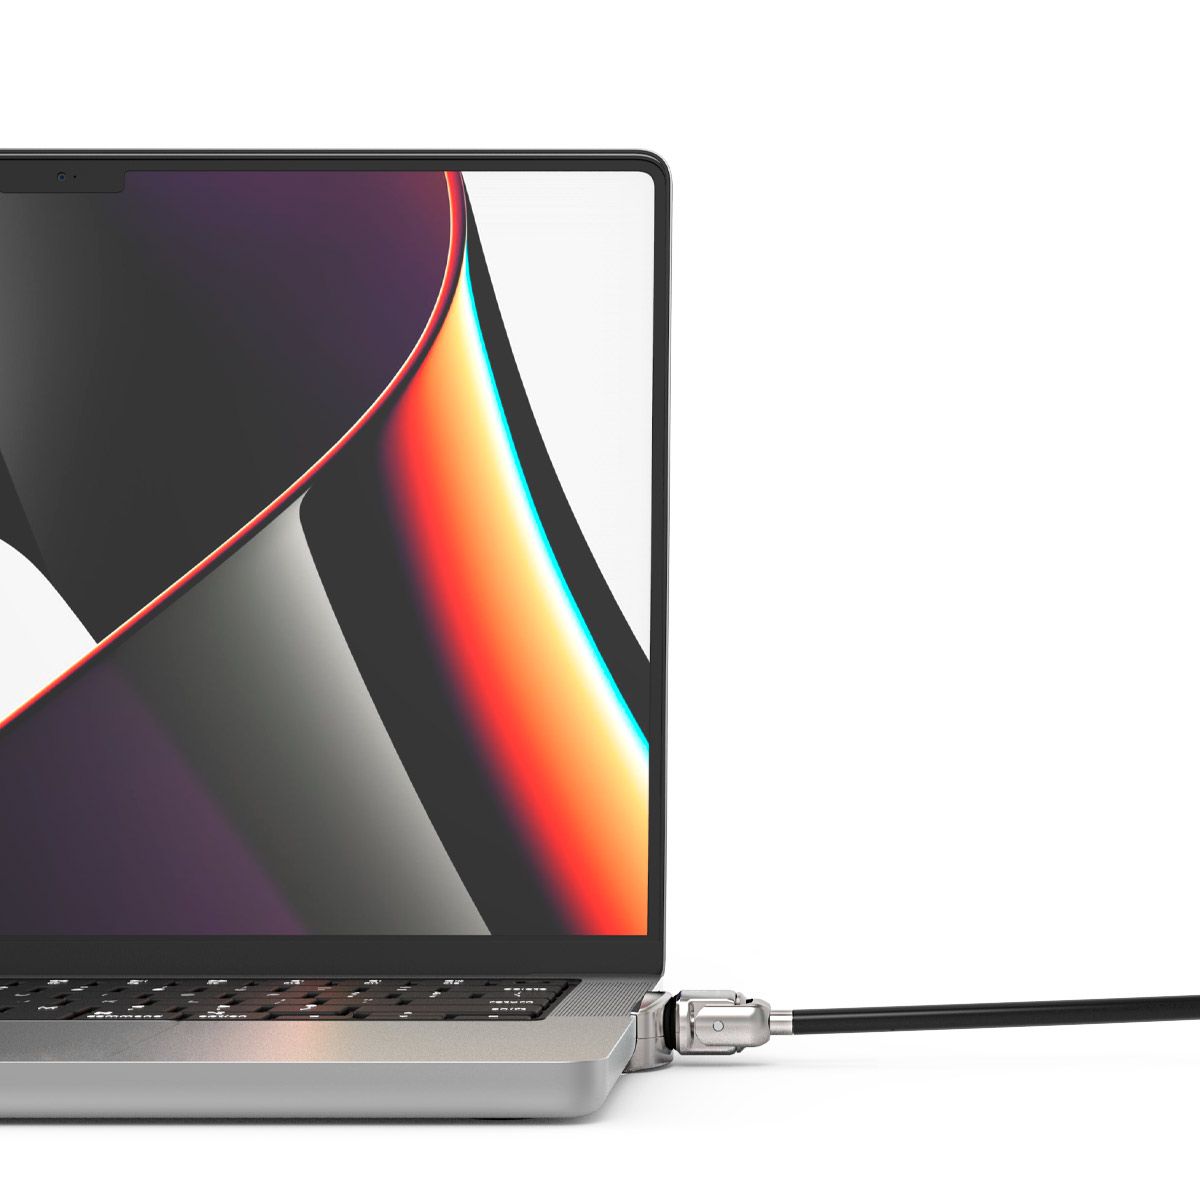 MacBook M1 Secured Lock Maclocks